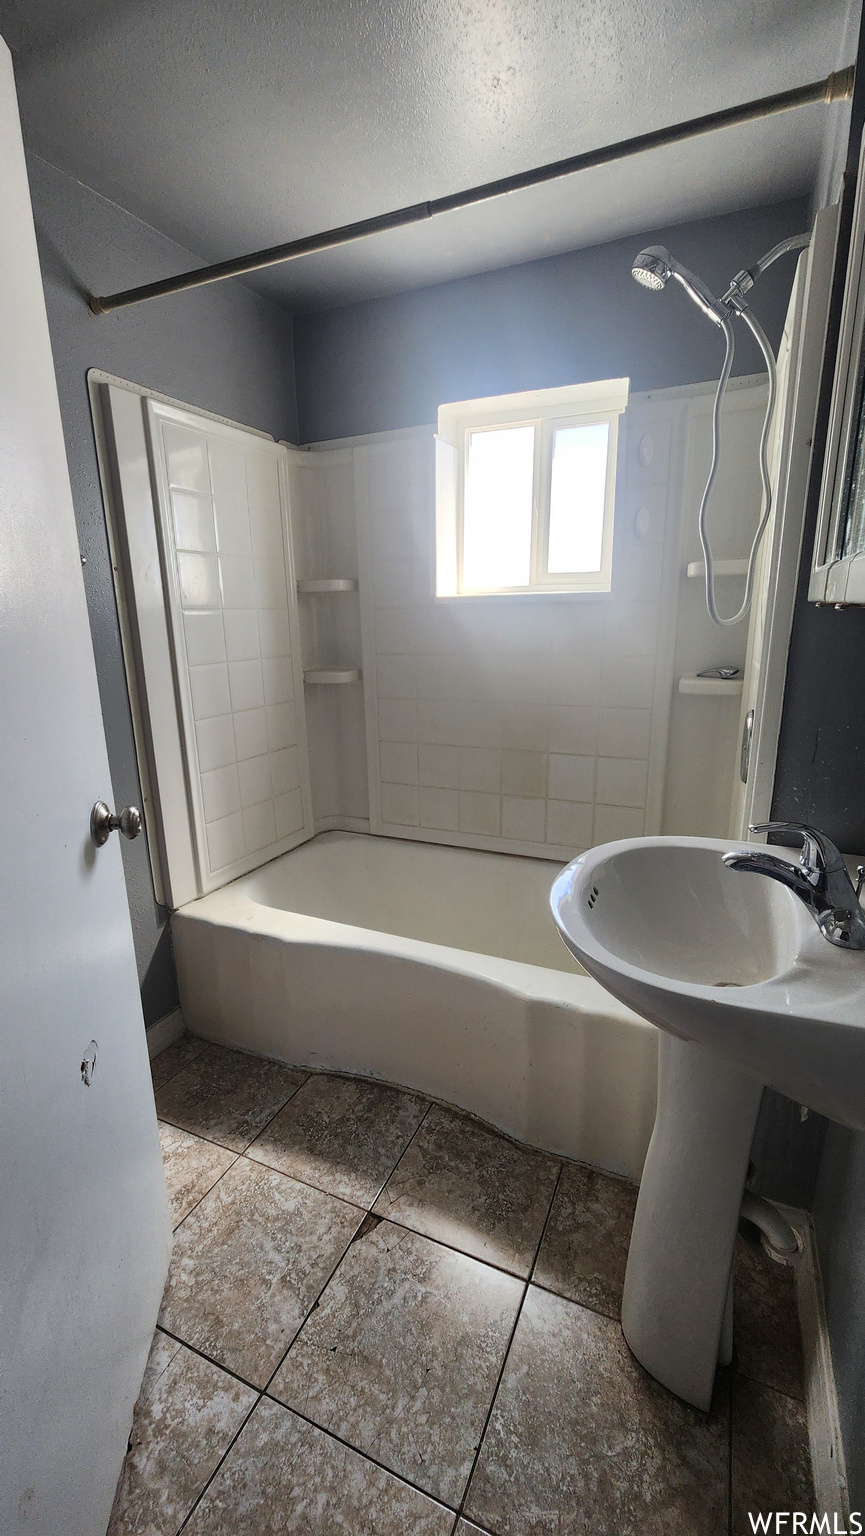 Bathroom featuring washbasin, tiled shower / bath, tile flooring, and a textured ceiling